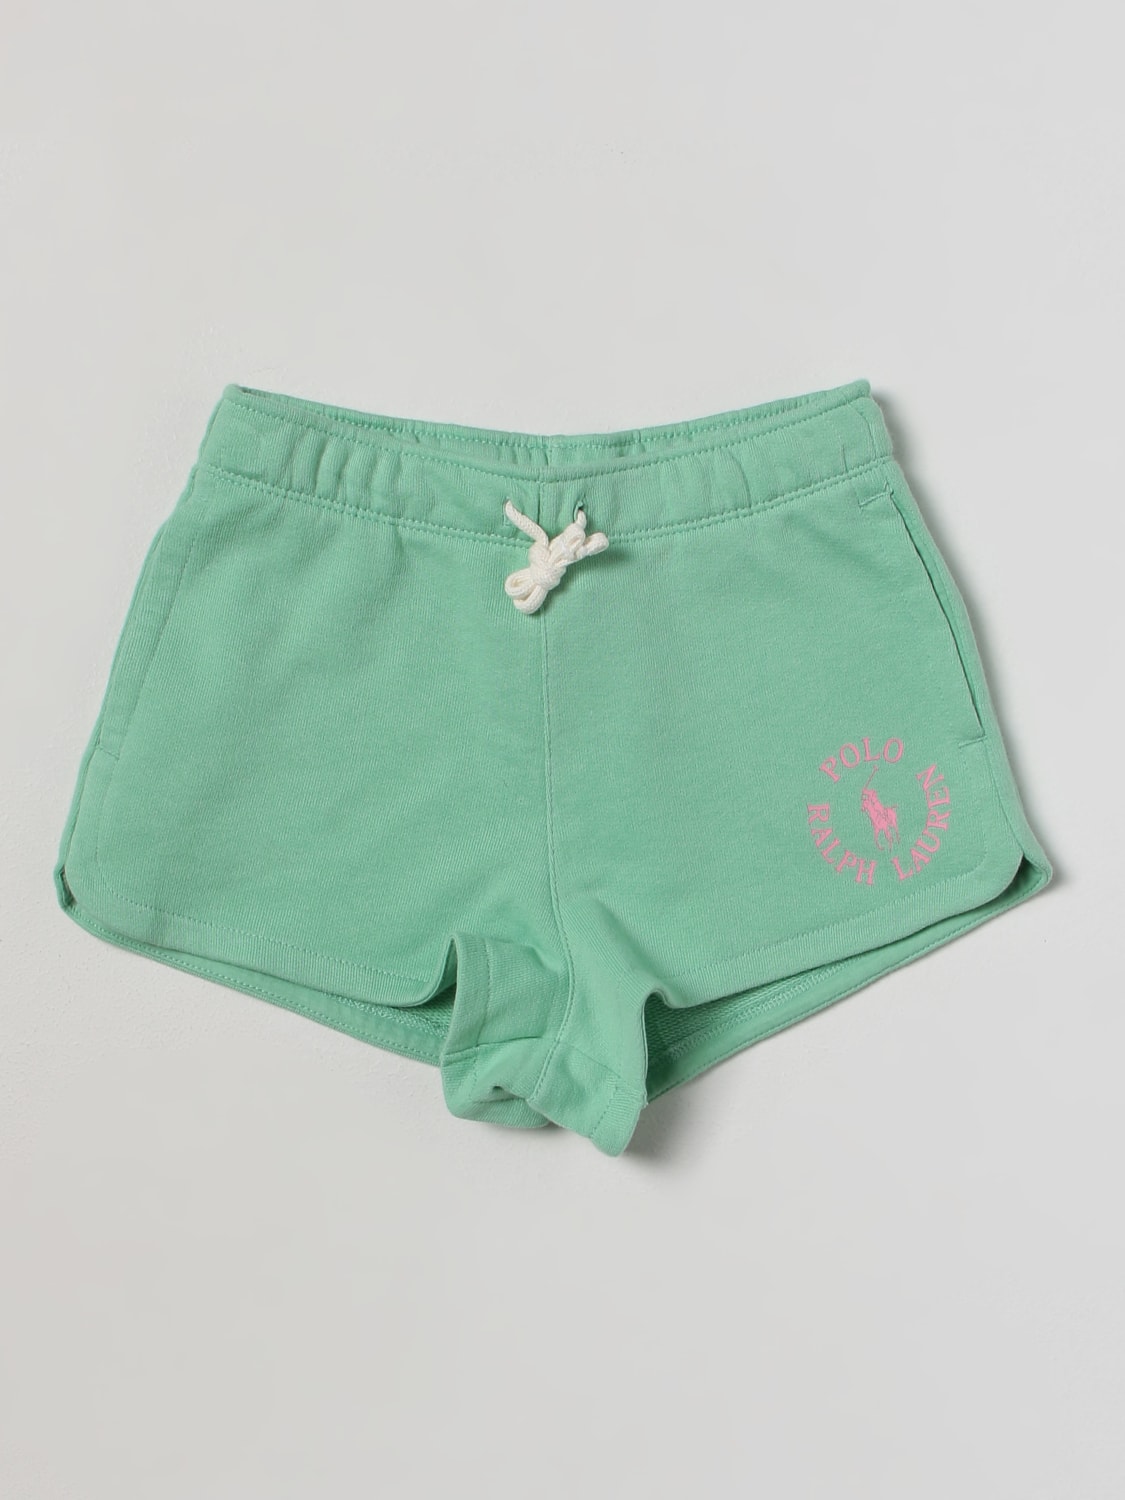 POLO RALPH LAUREN: pants for boys - Green | Polo Ralph Lauren pants ...